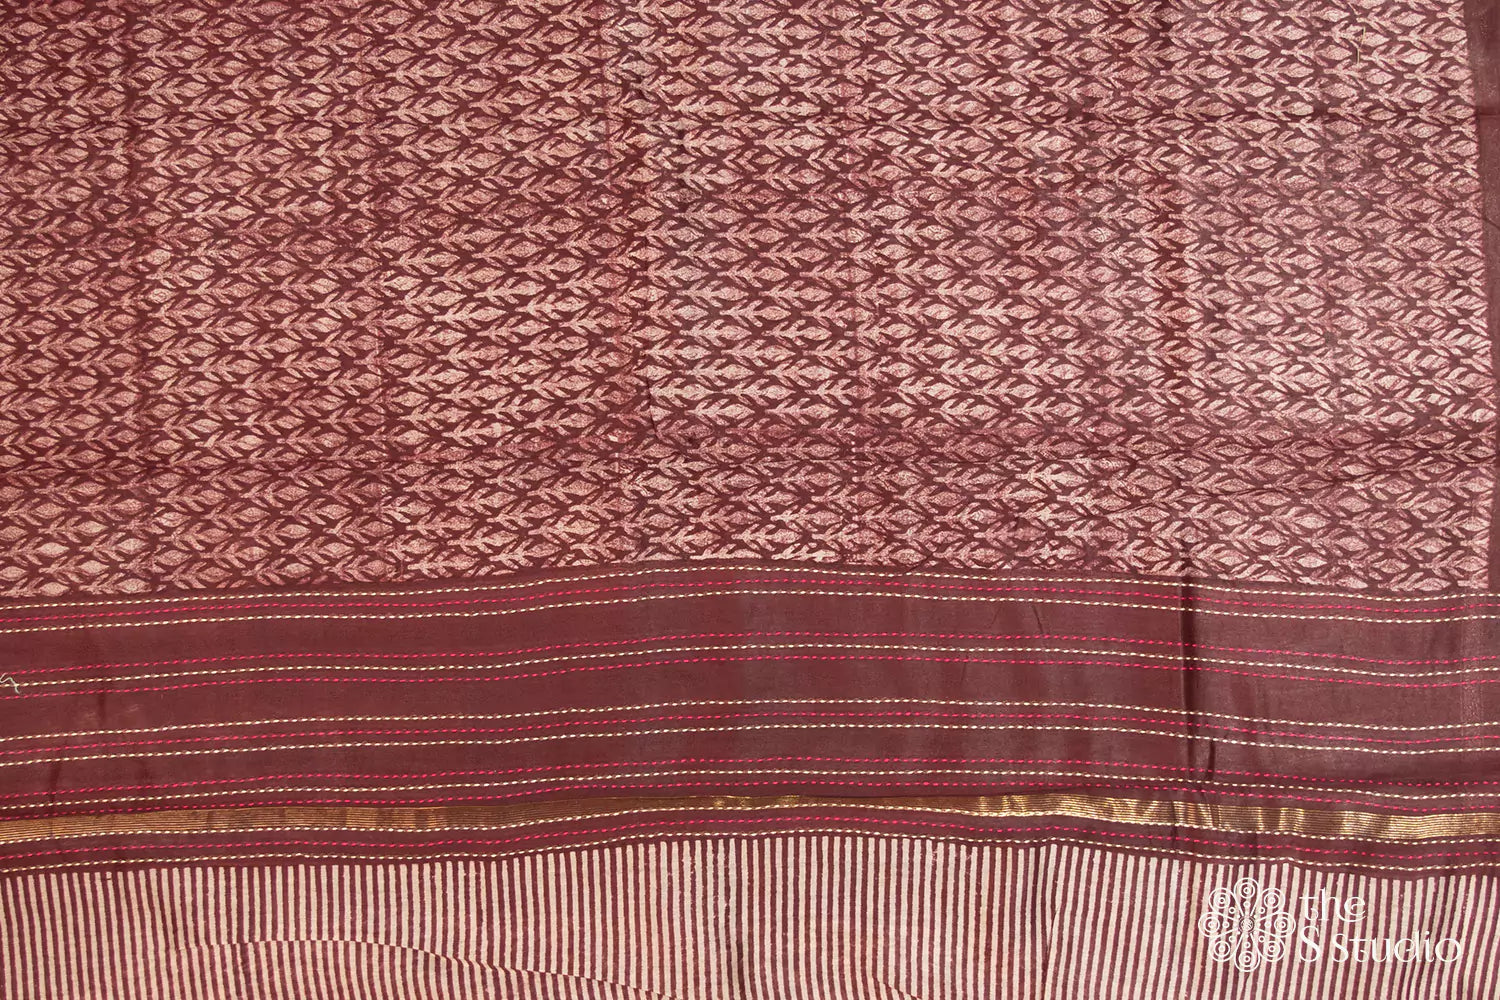 Maroon printed cotton saree